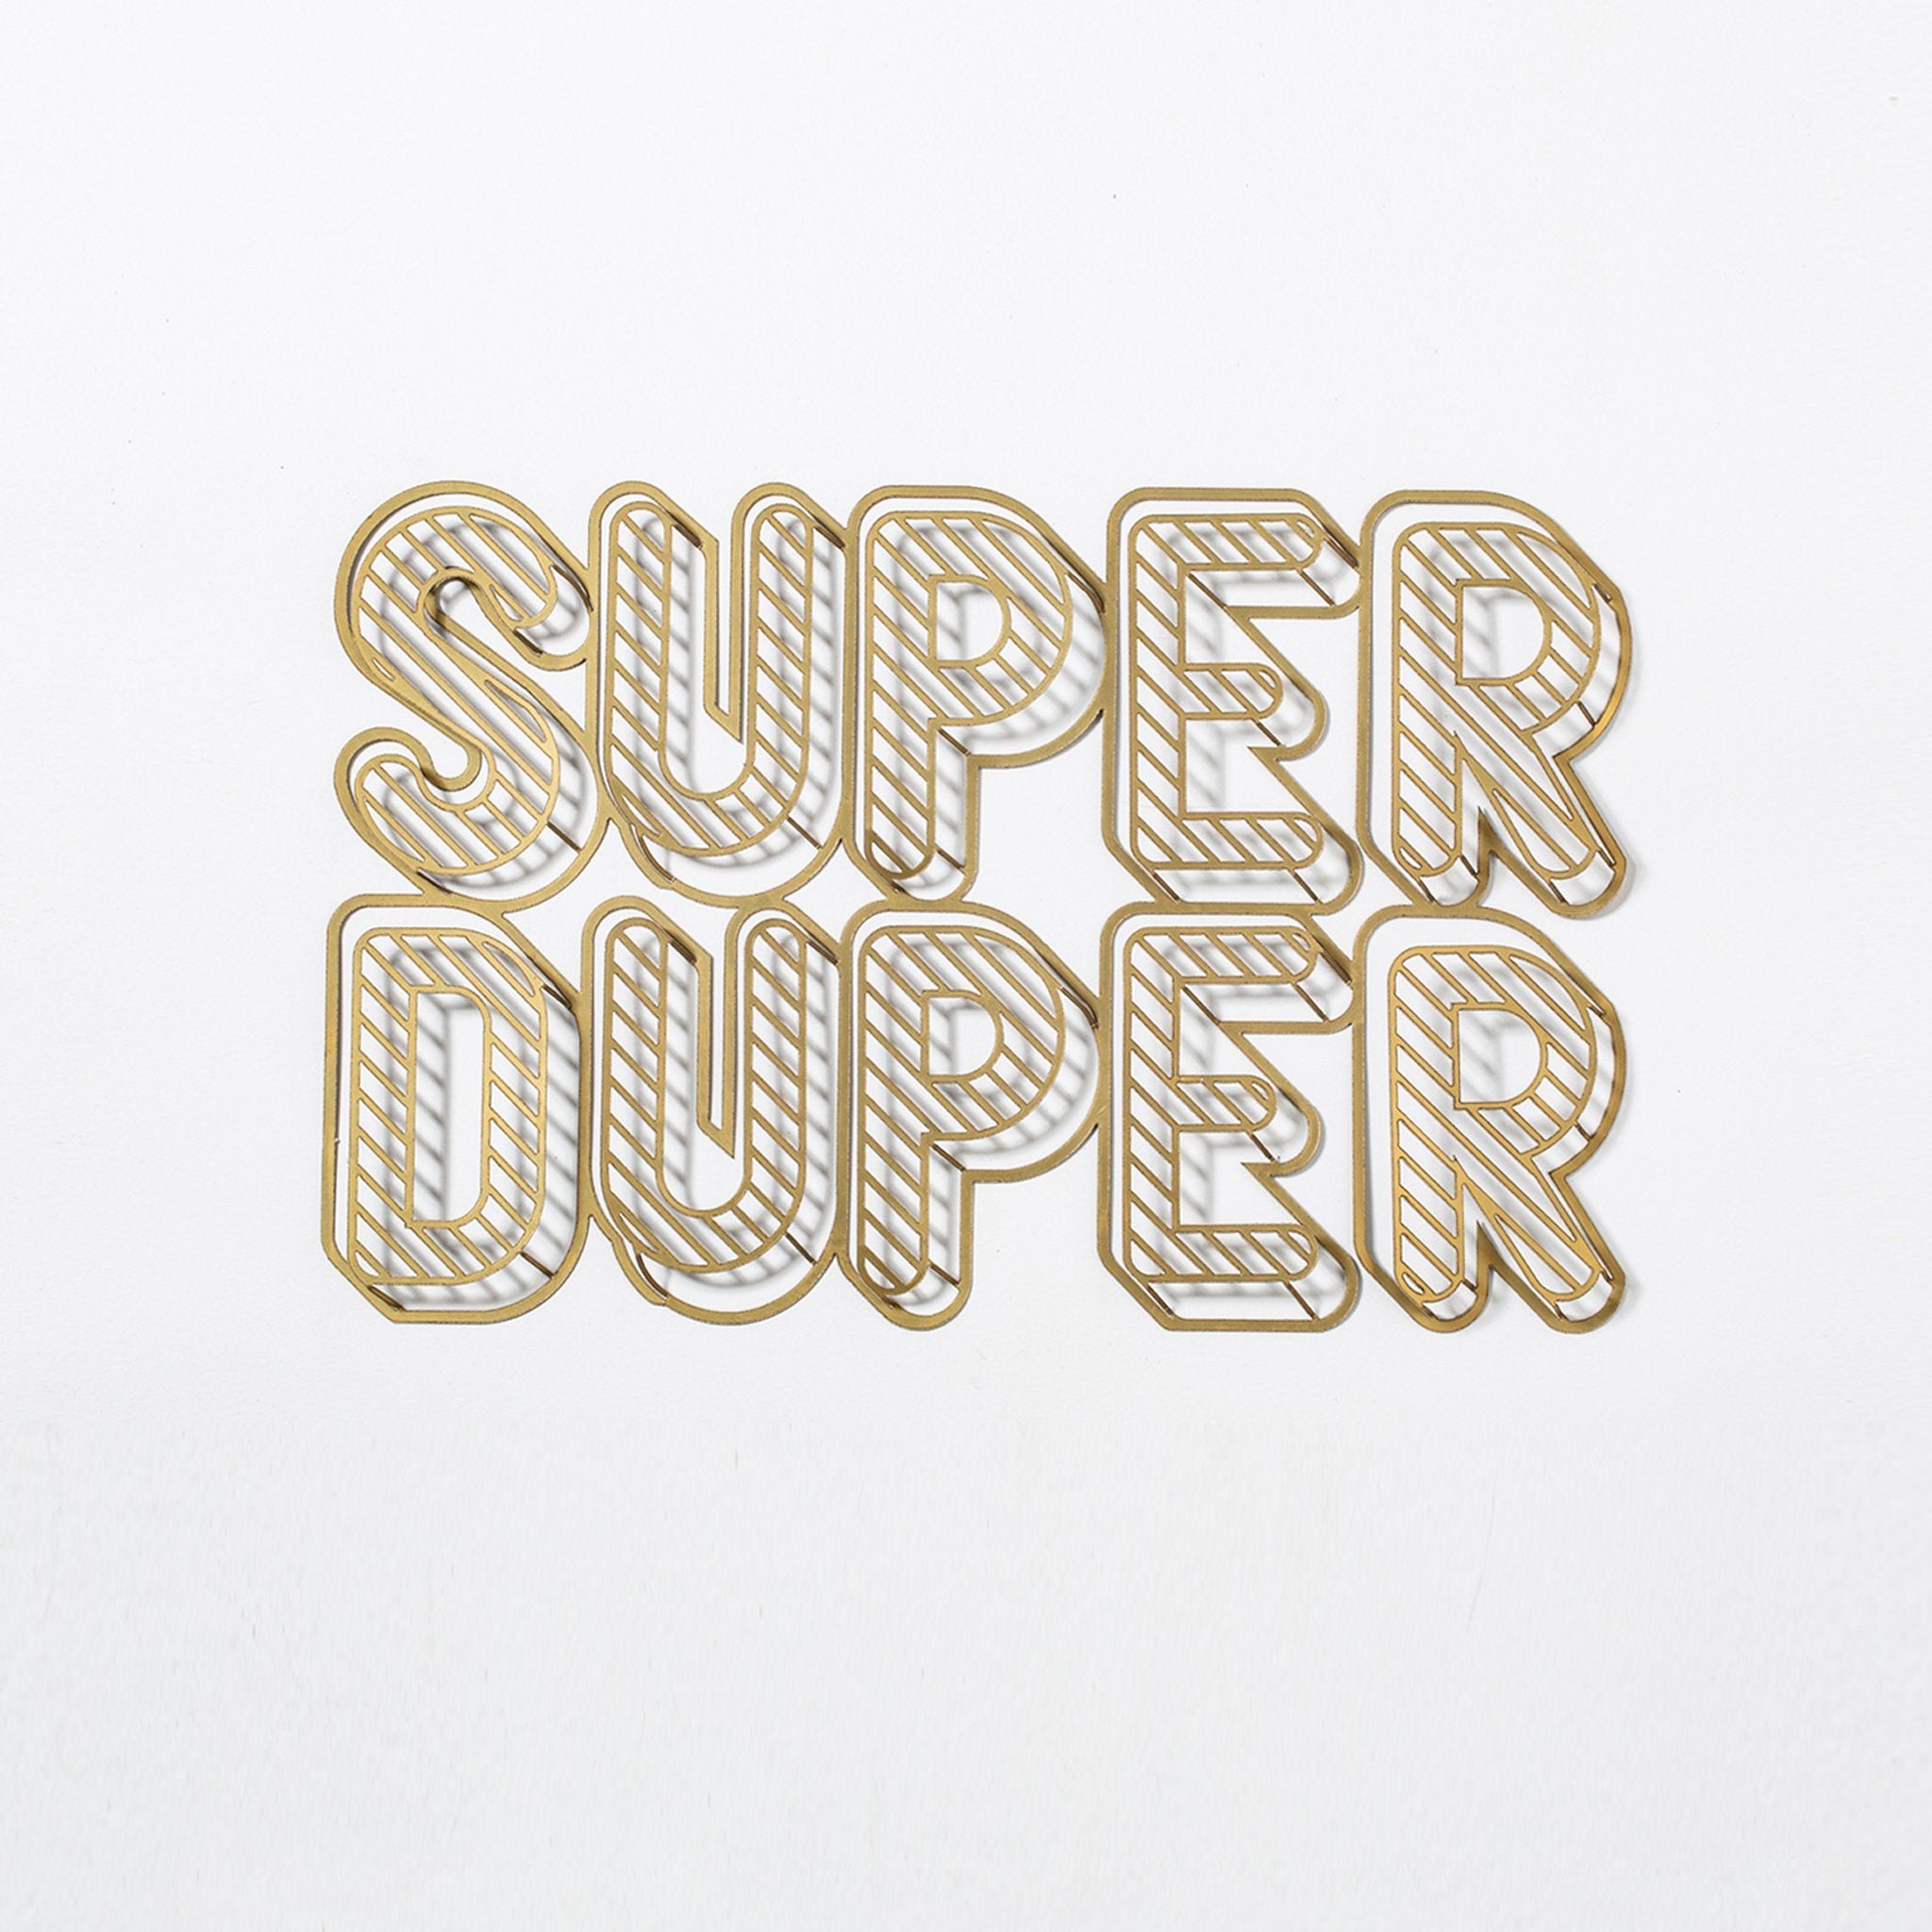 SUPER DUPER Inspirational Phrase - ShapeMixer